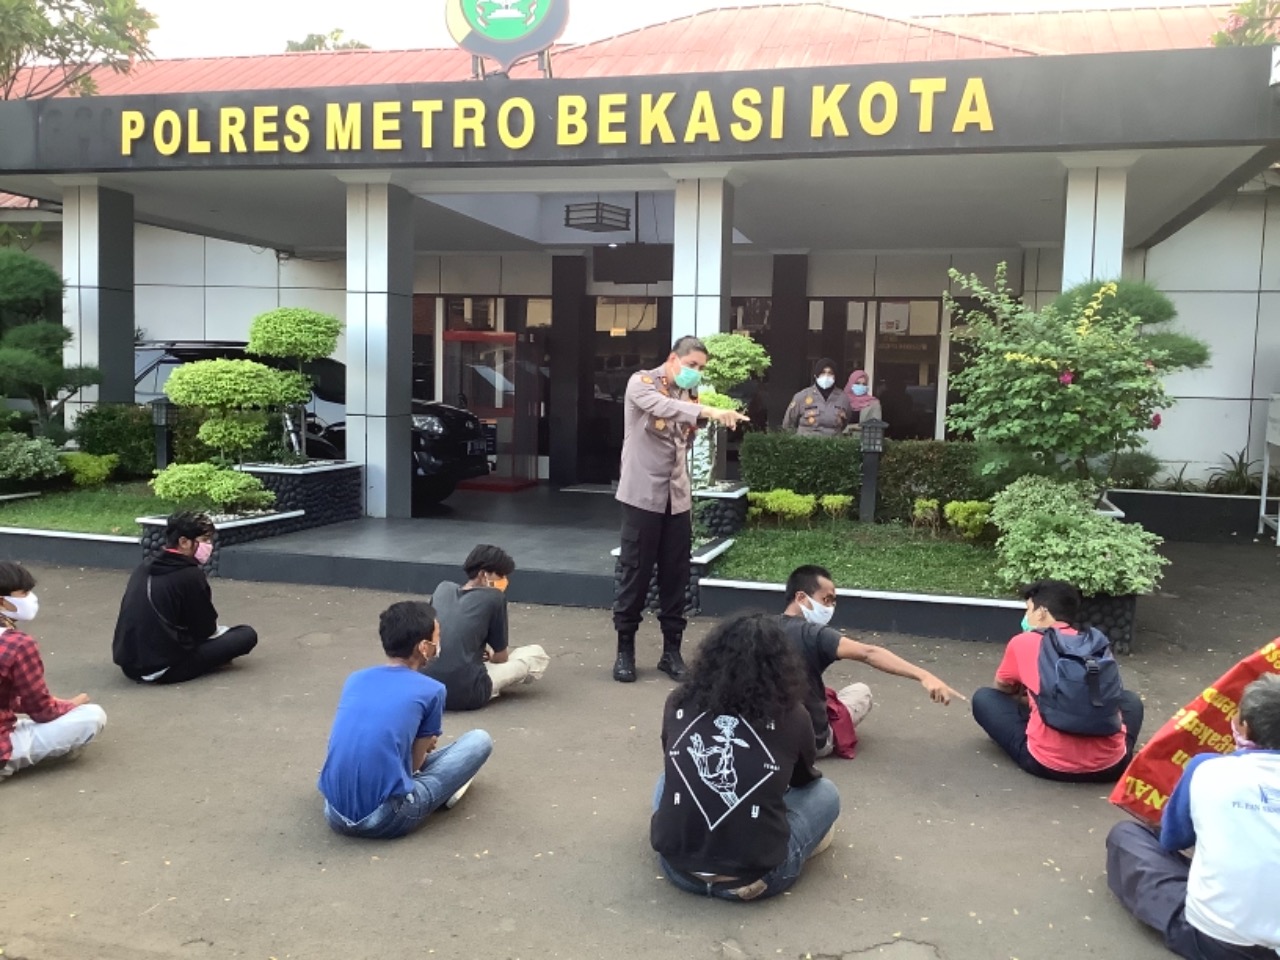 Wakapolres Metro Bekasi Kota, AKBP Alfian Nurrizal